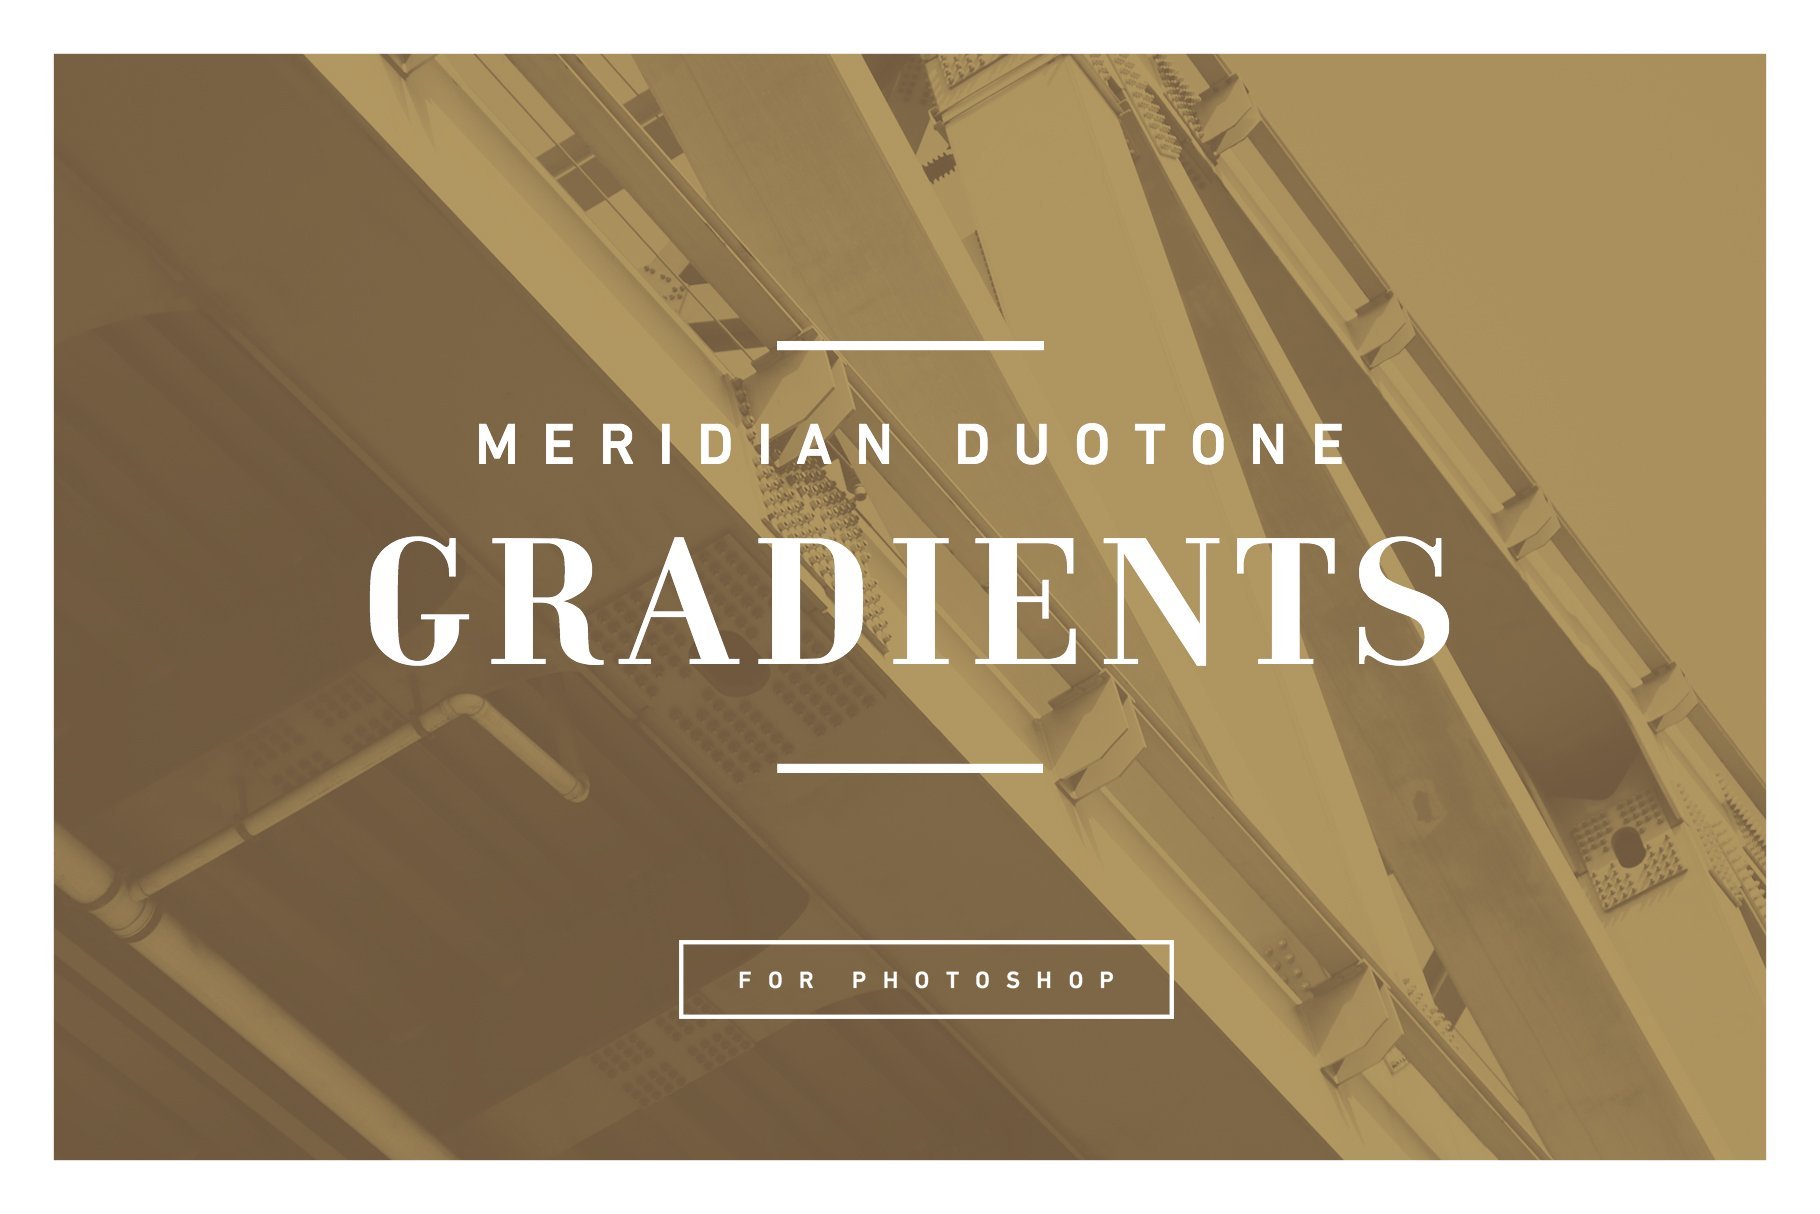 MERIDIAN Duotone Gradientscover image.